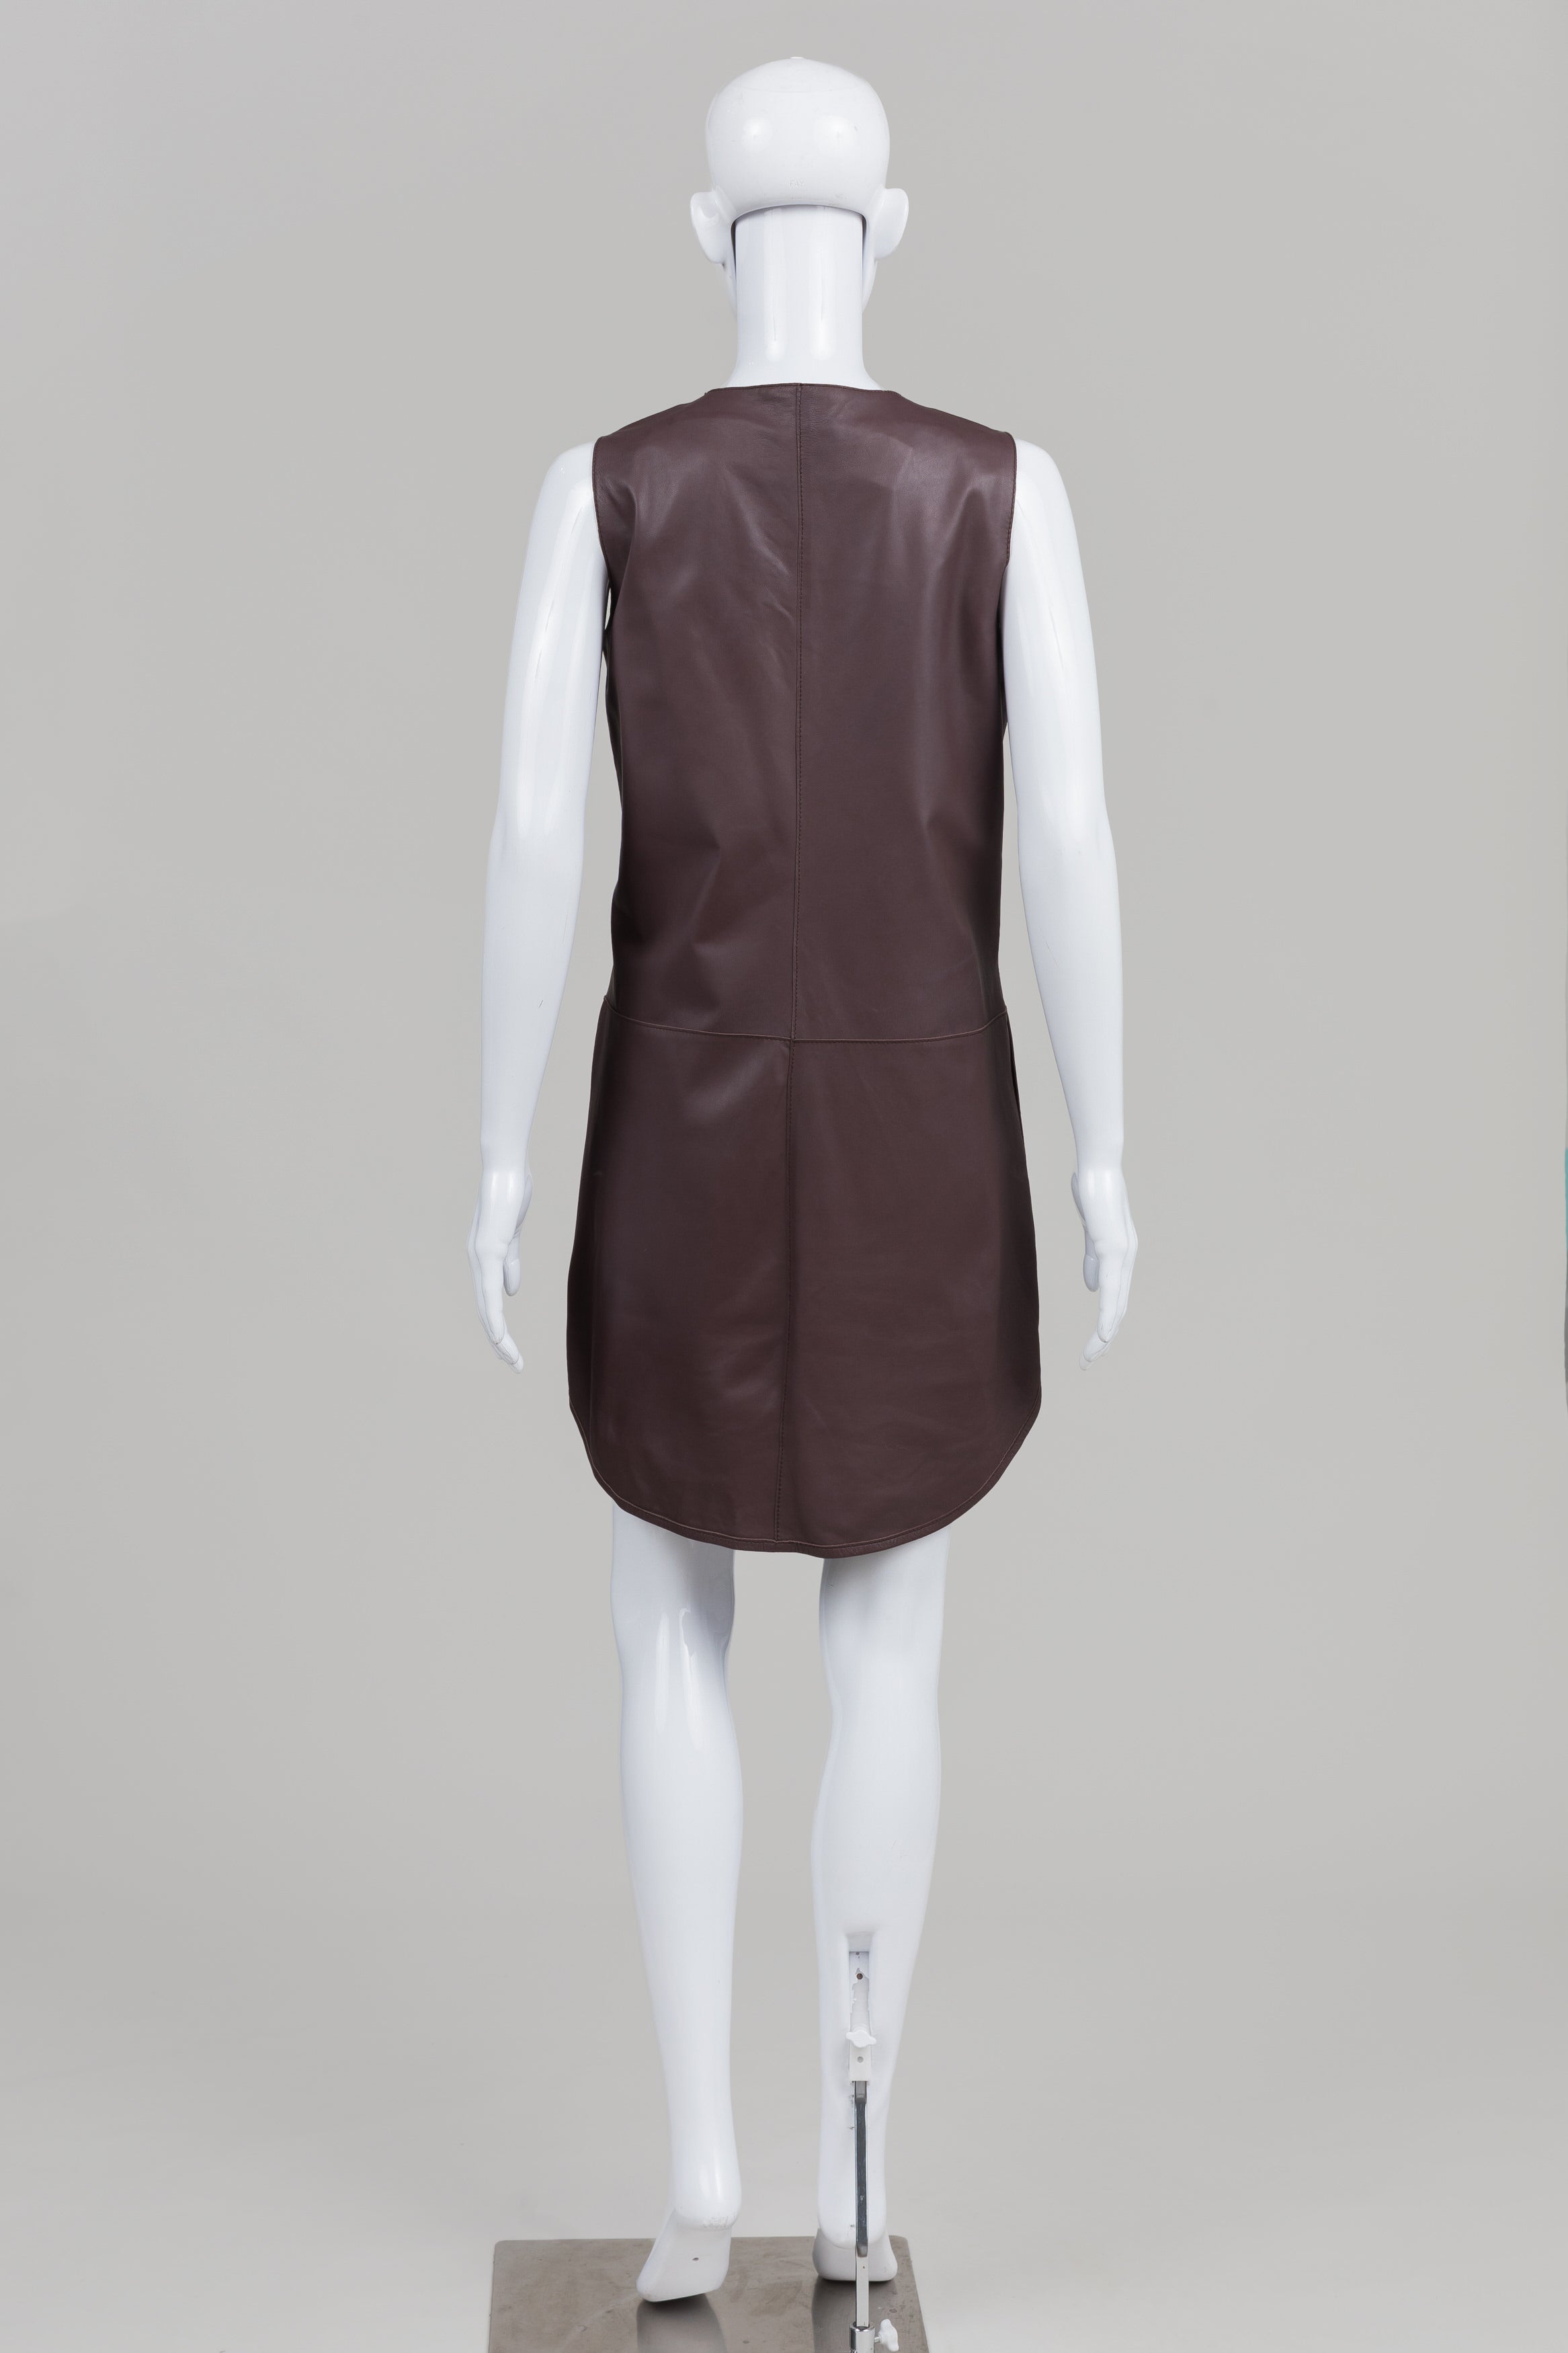 Rebecca Taylor plum leather sleeveless dress (6)